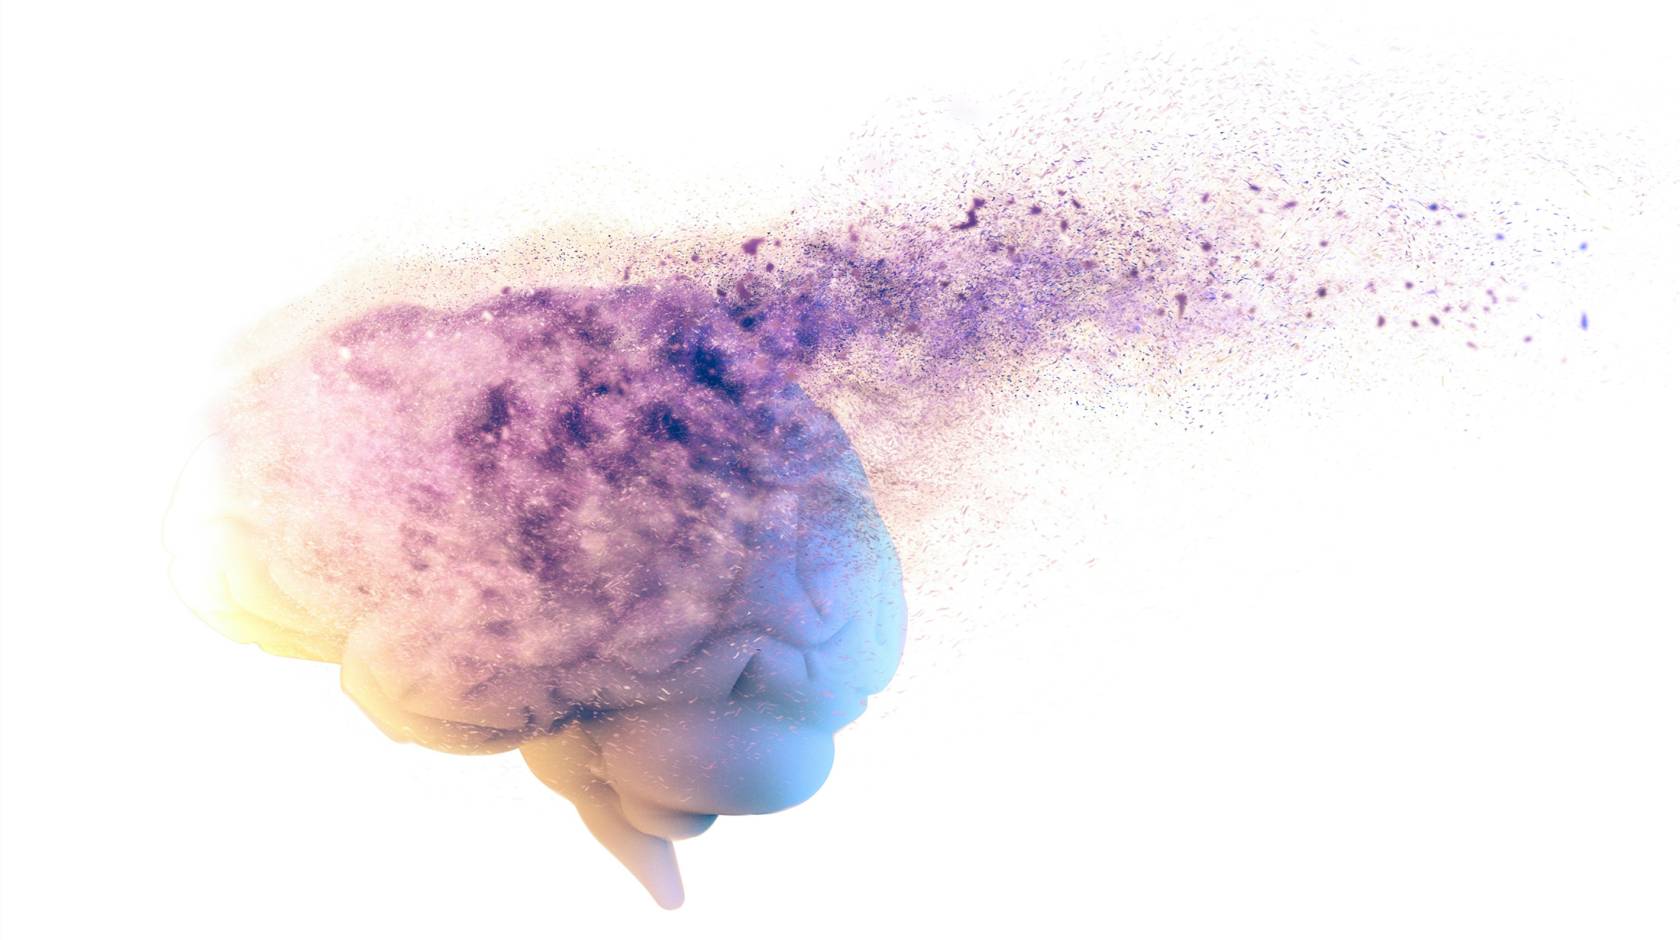 An image of a purple brain disintegrating